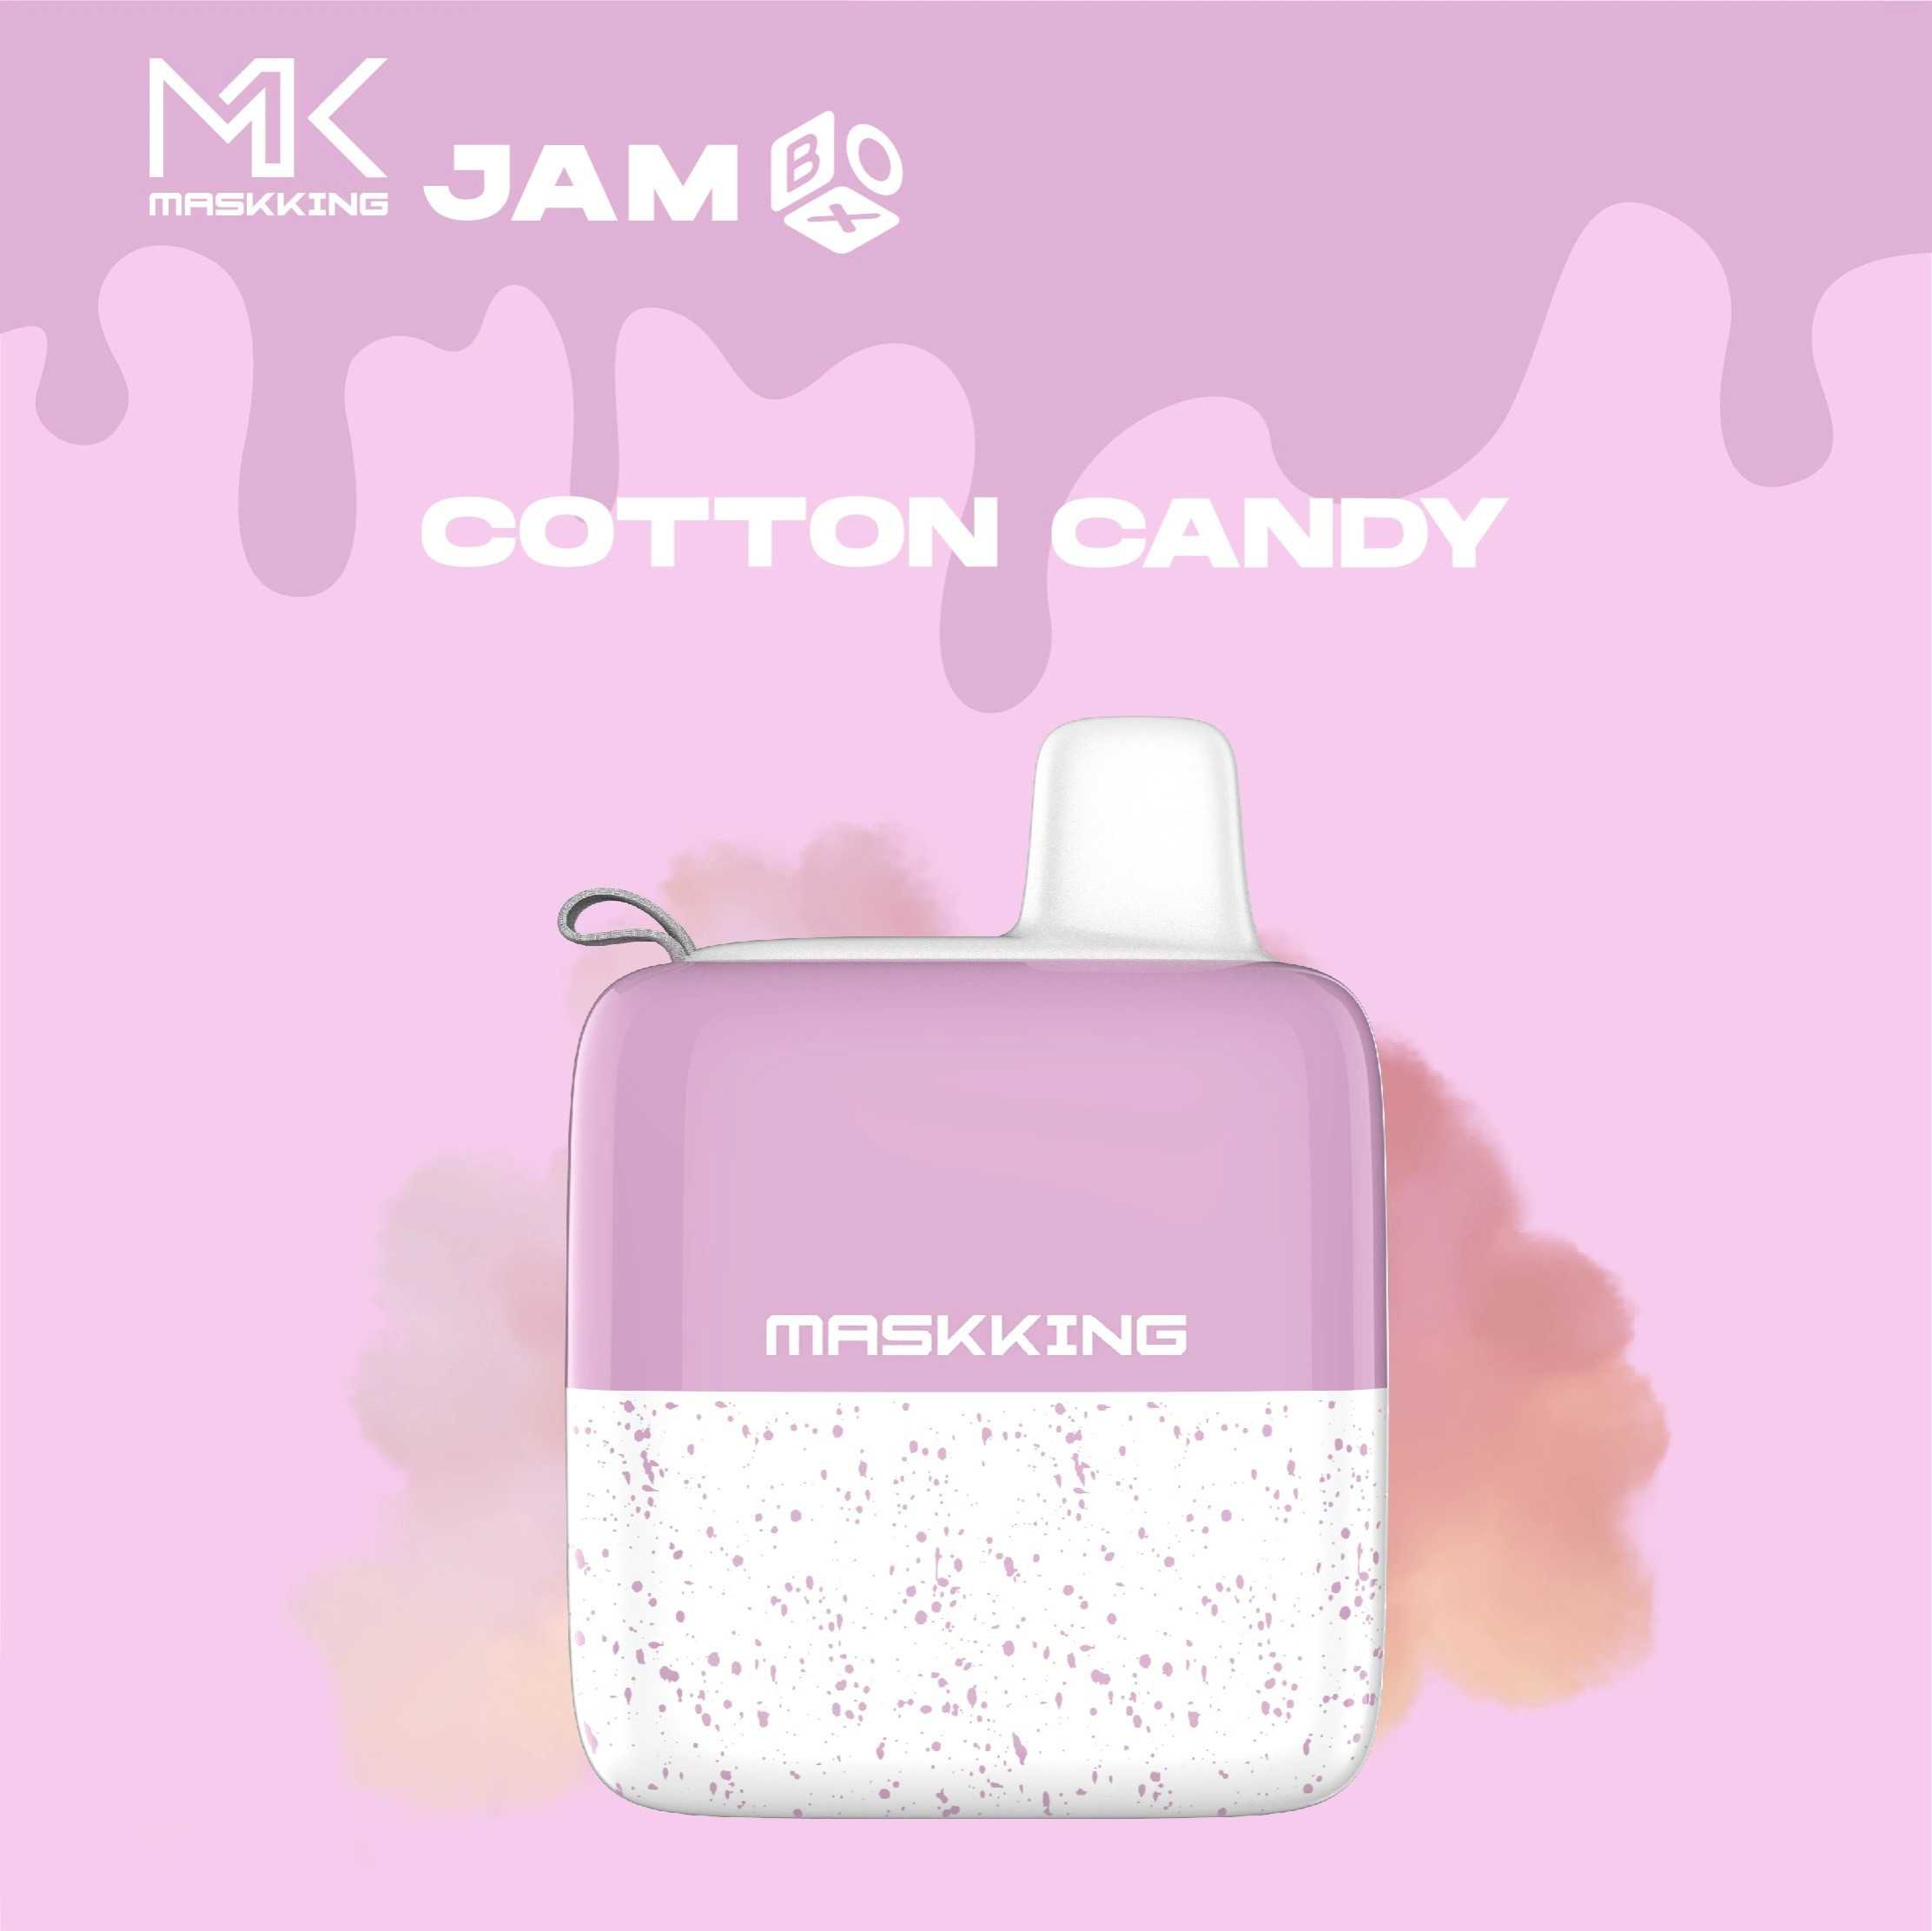 Maskking Jam Box - Cotton Candy